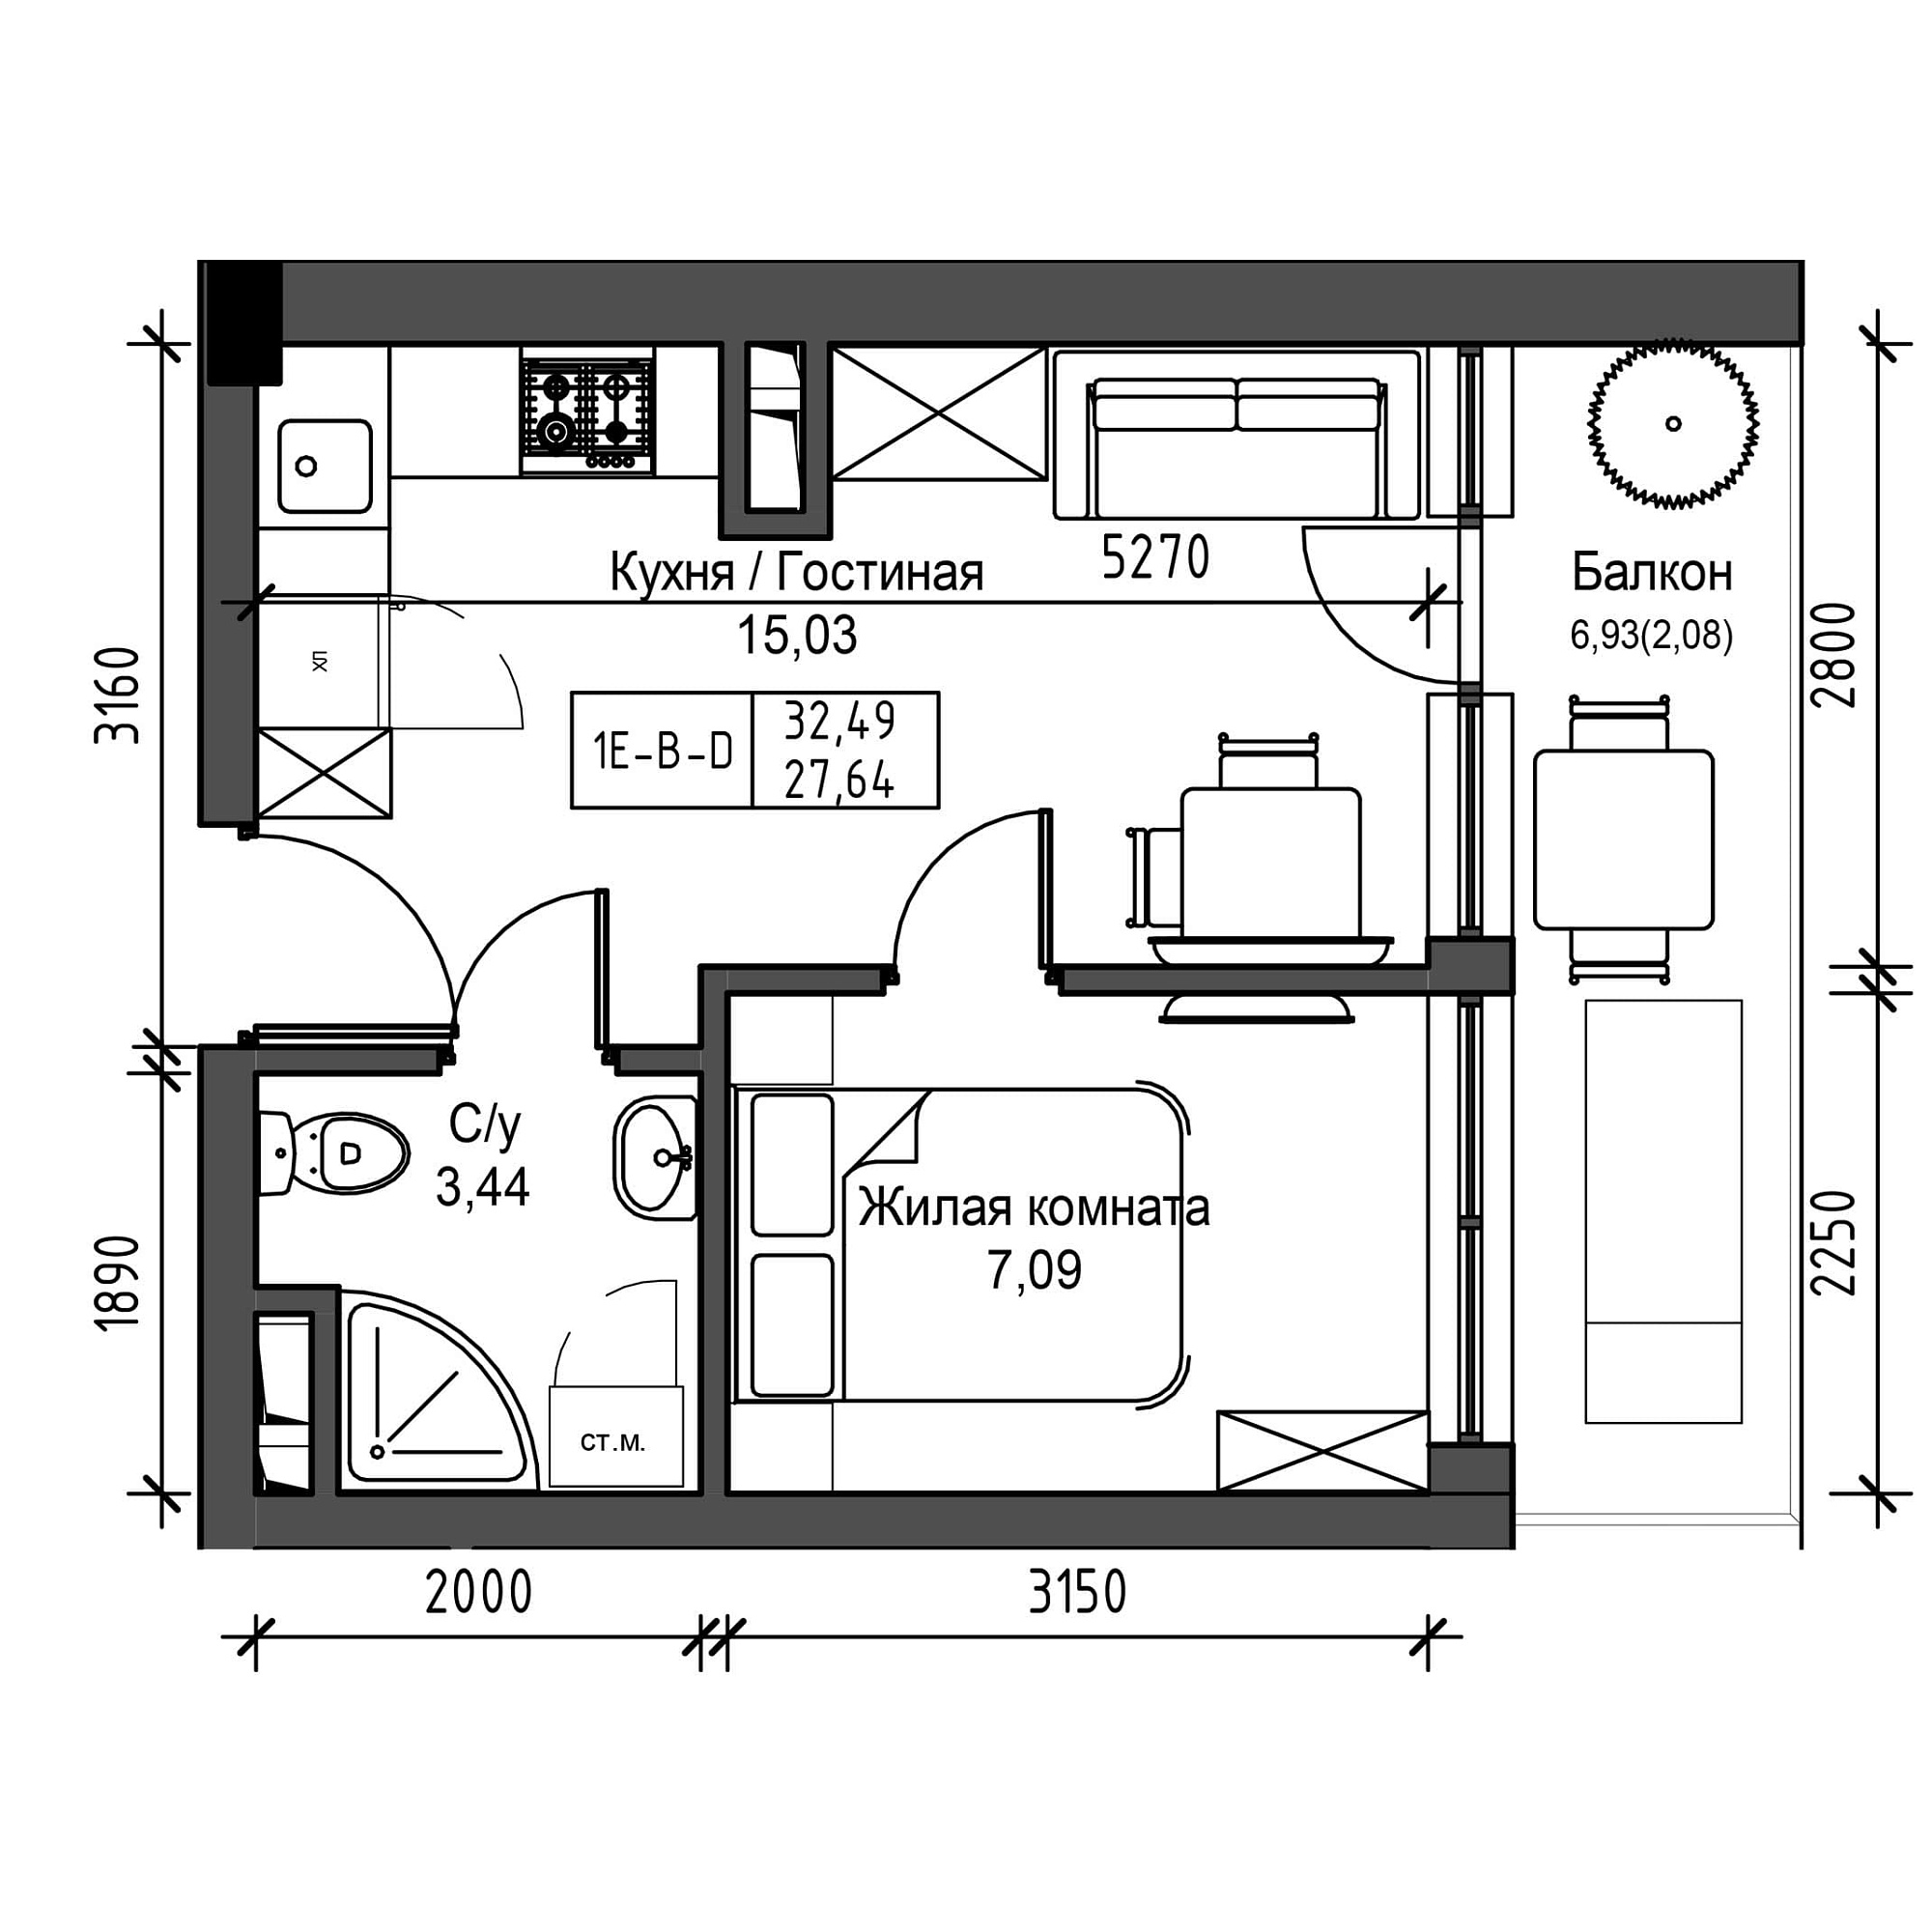 Planning 1-rm flats area 27.64m2, UM-001-08/0001.